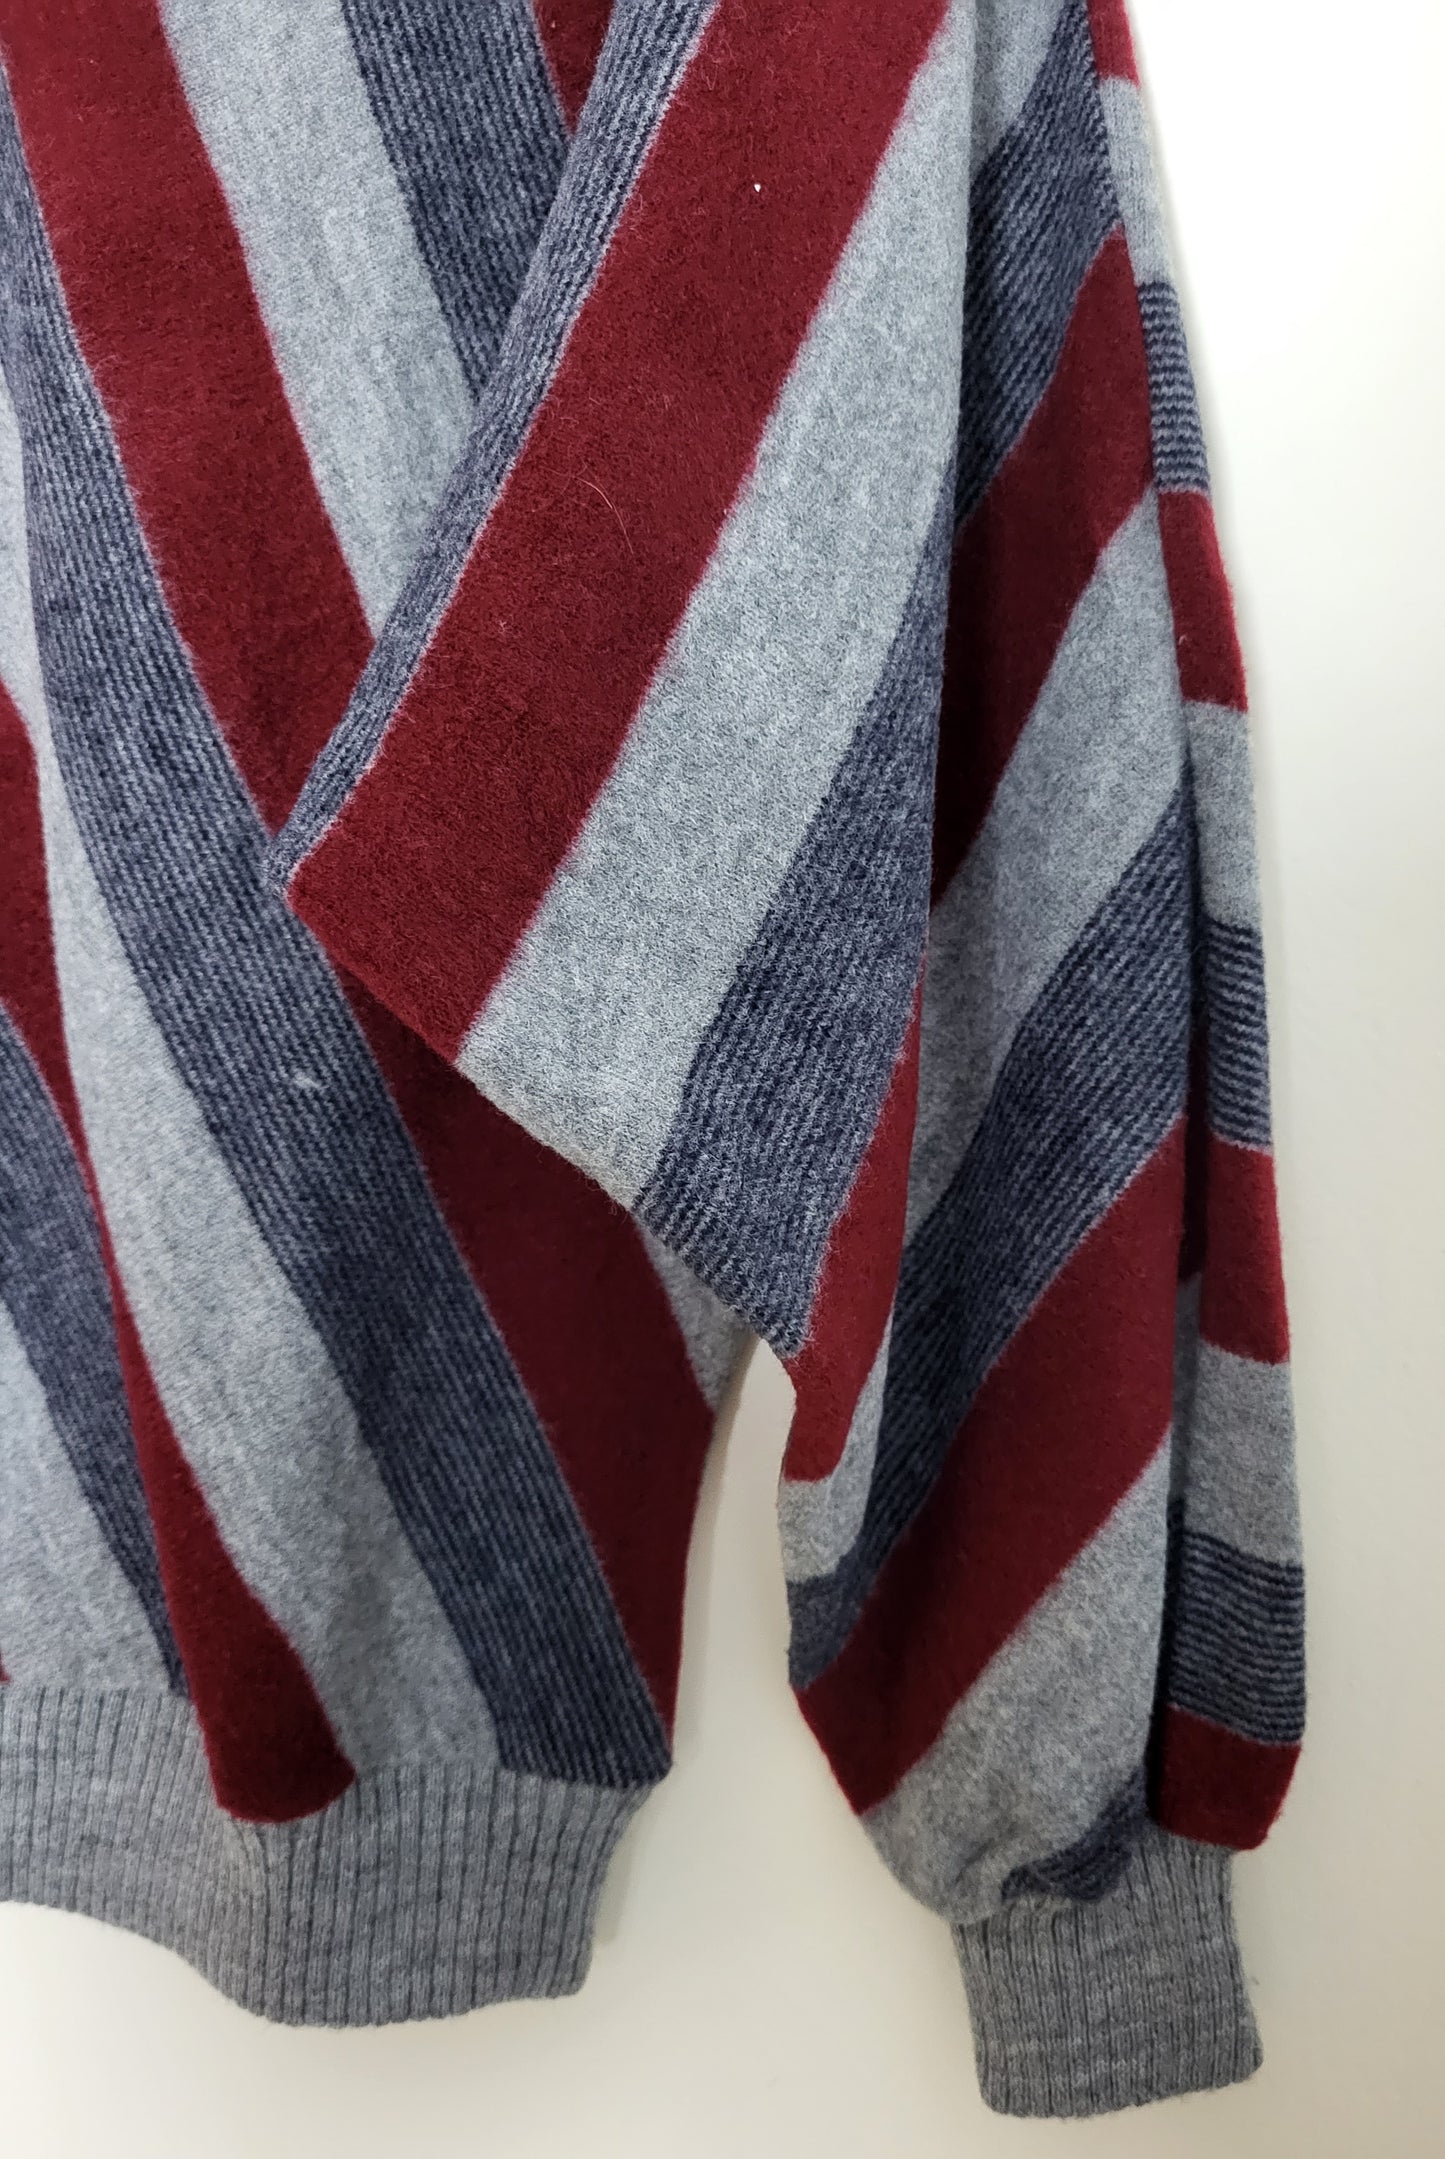 Vintage - Pullover - Muster/Steifen - Vintage Italy - Bunt - Damen - M